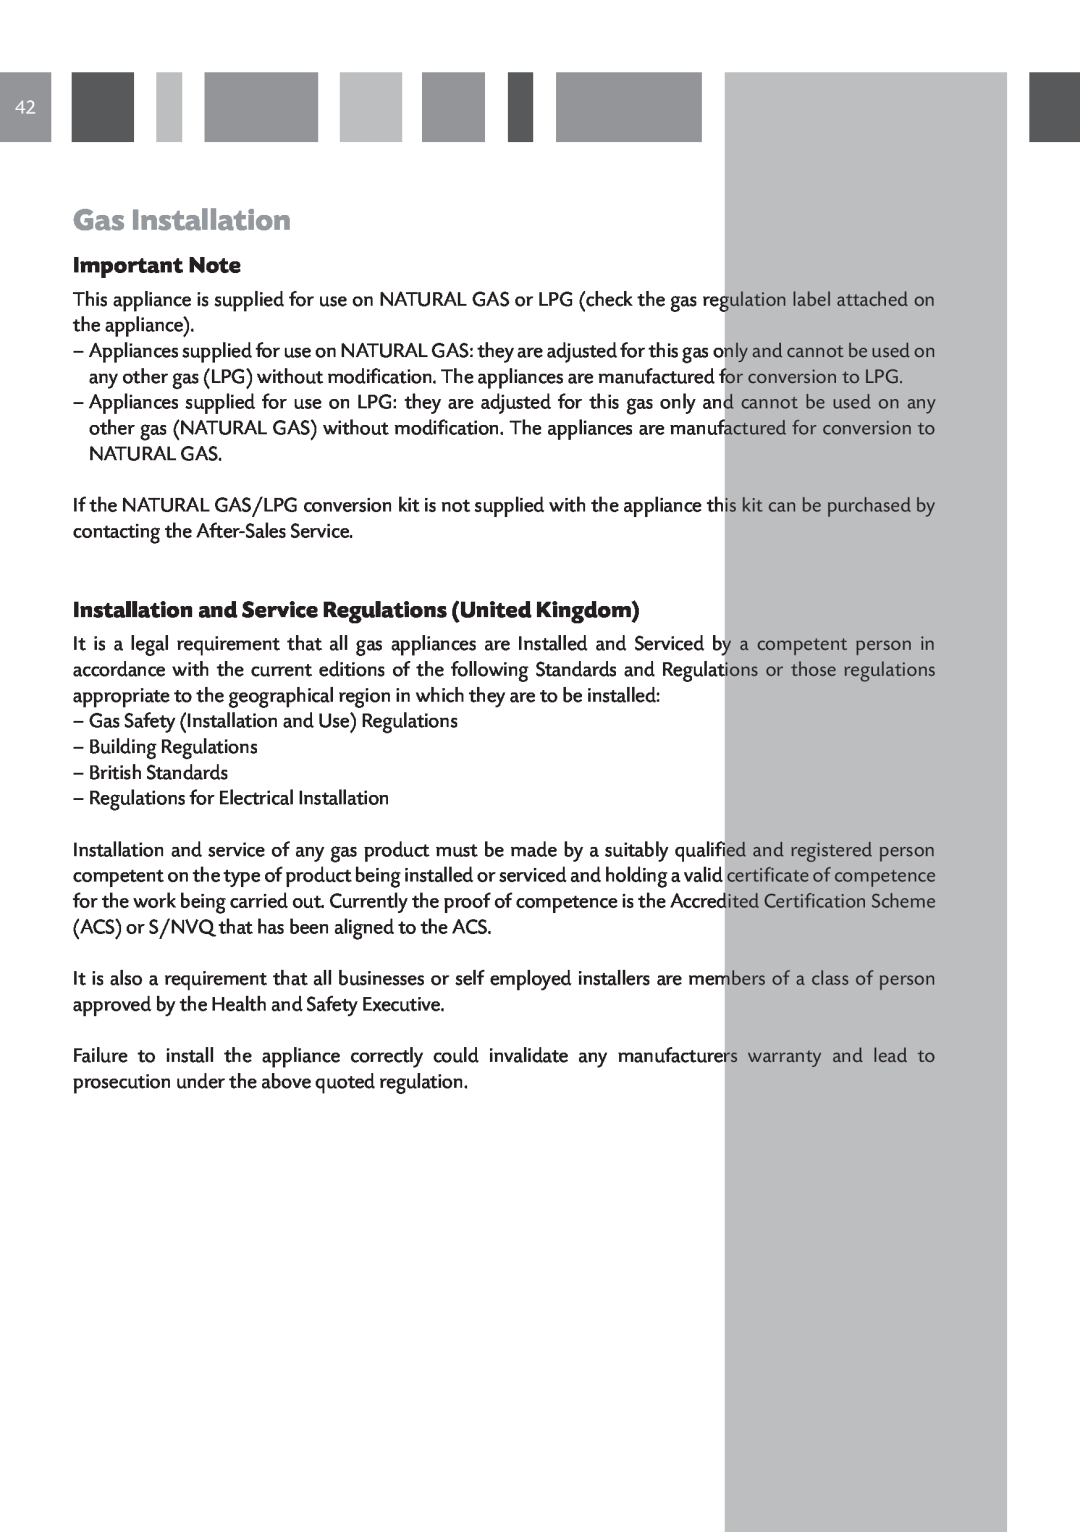 CDA RV 901, RV 1001 manual Gas Installation, Important Note, Installation and Service Regulations United Kingdom 